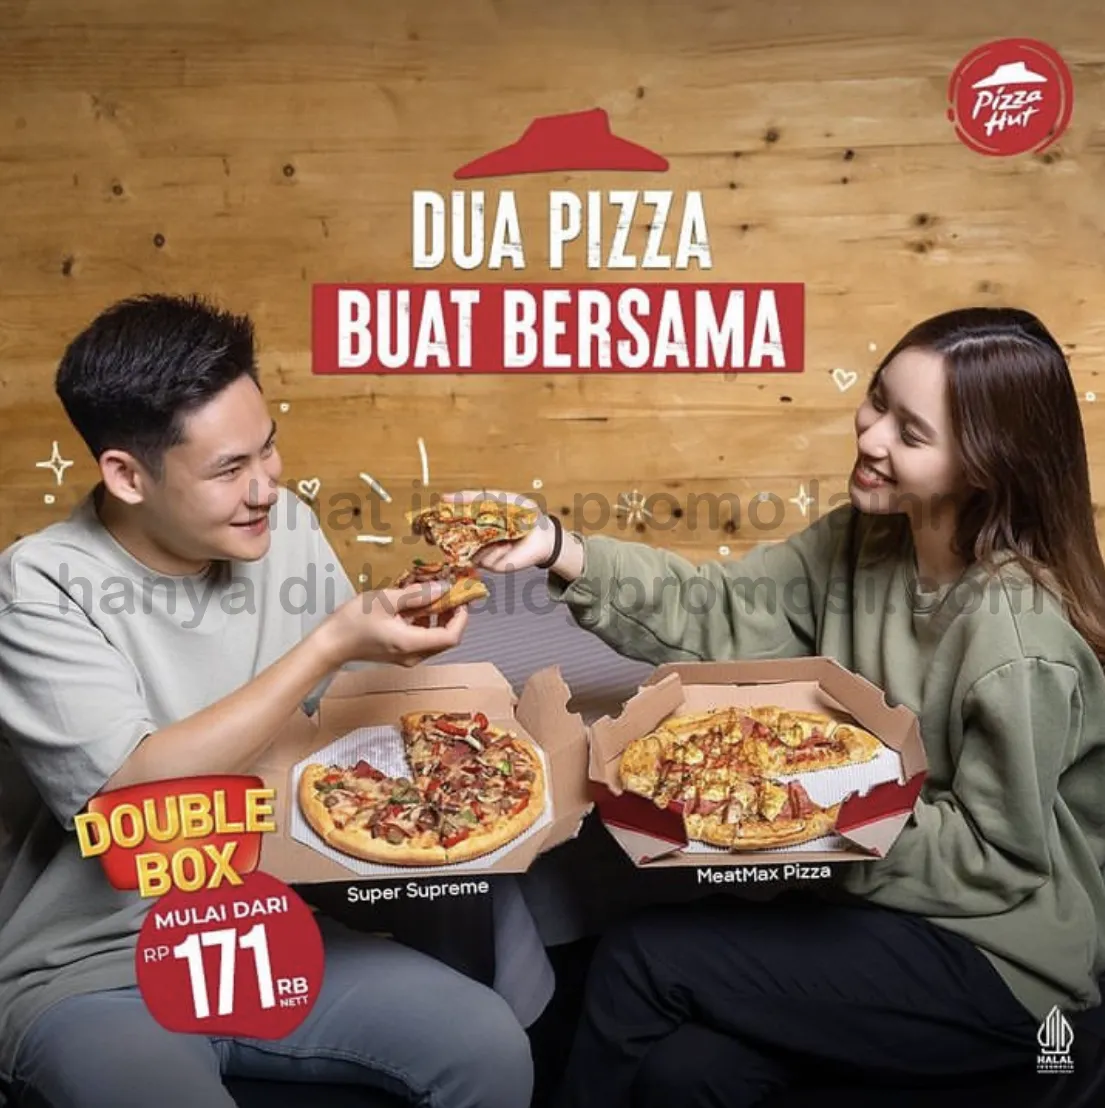 Promo PIZZA HUT DOUBLE BOX - Paket 2 Pizza mulai Rp. 171.000 pas banget untuk 3 - 4 Orang